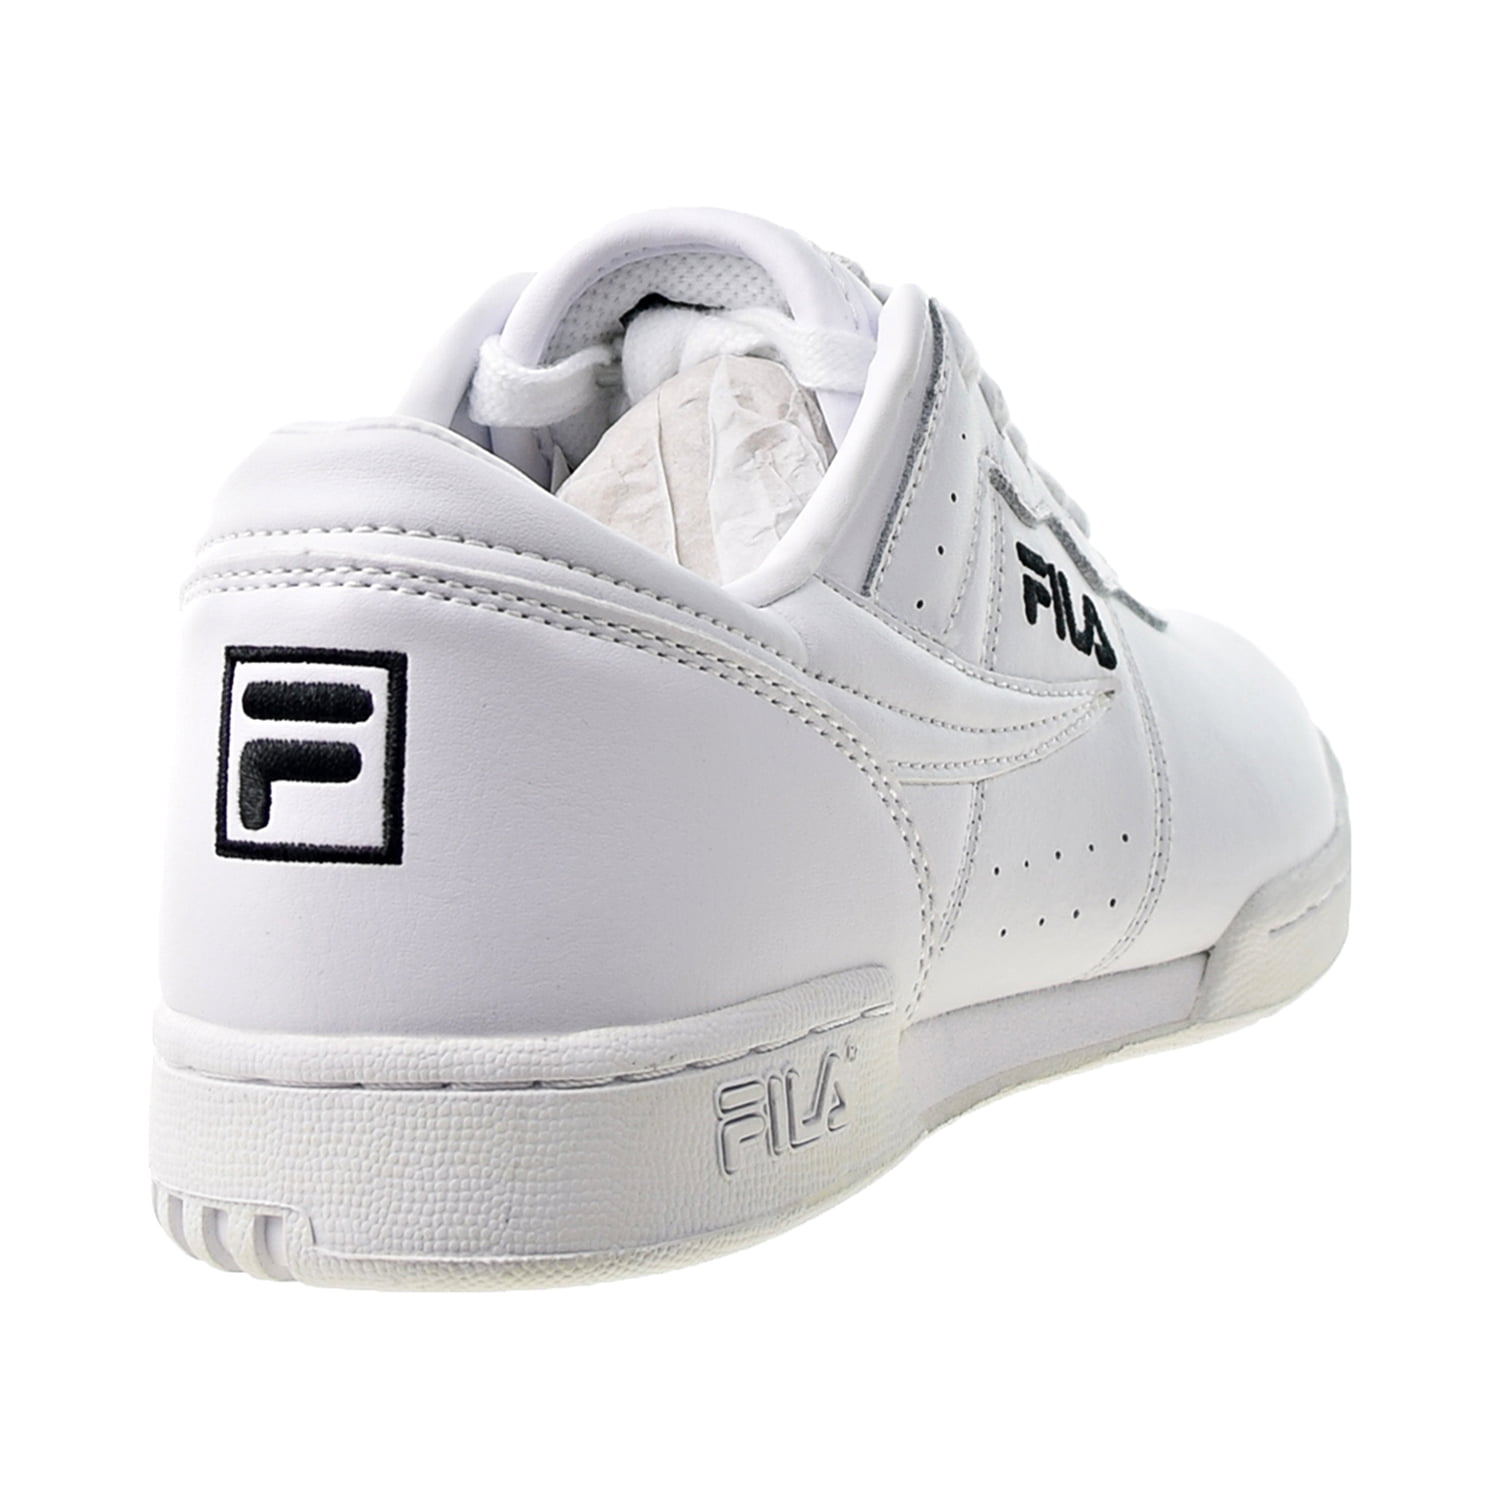 Ijzig opgraven Formulering Fila Original Fitness Women's Shoes White-Black 5vf80165-112 - Walmart.com